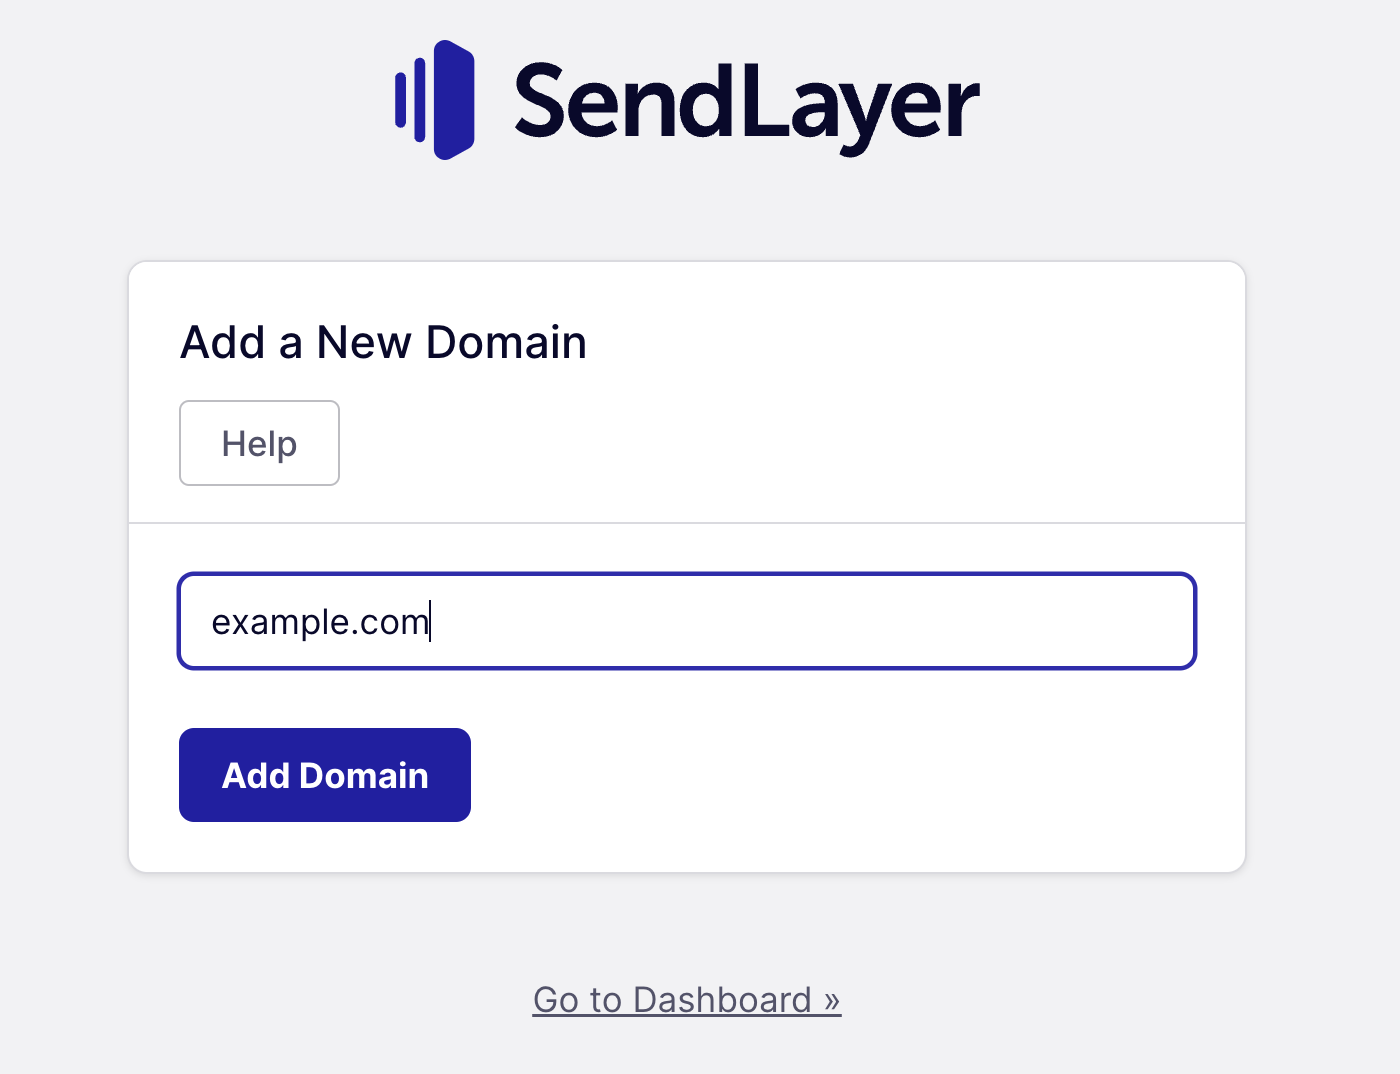 Adding a new domain to SendLayer